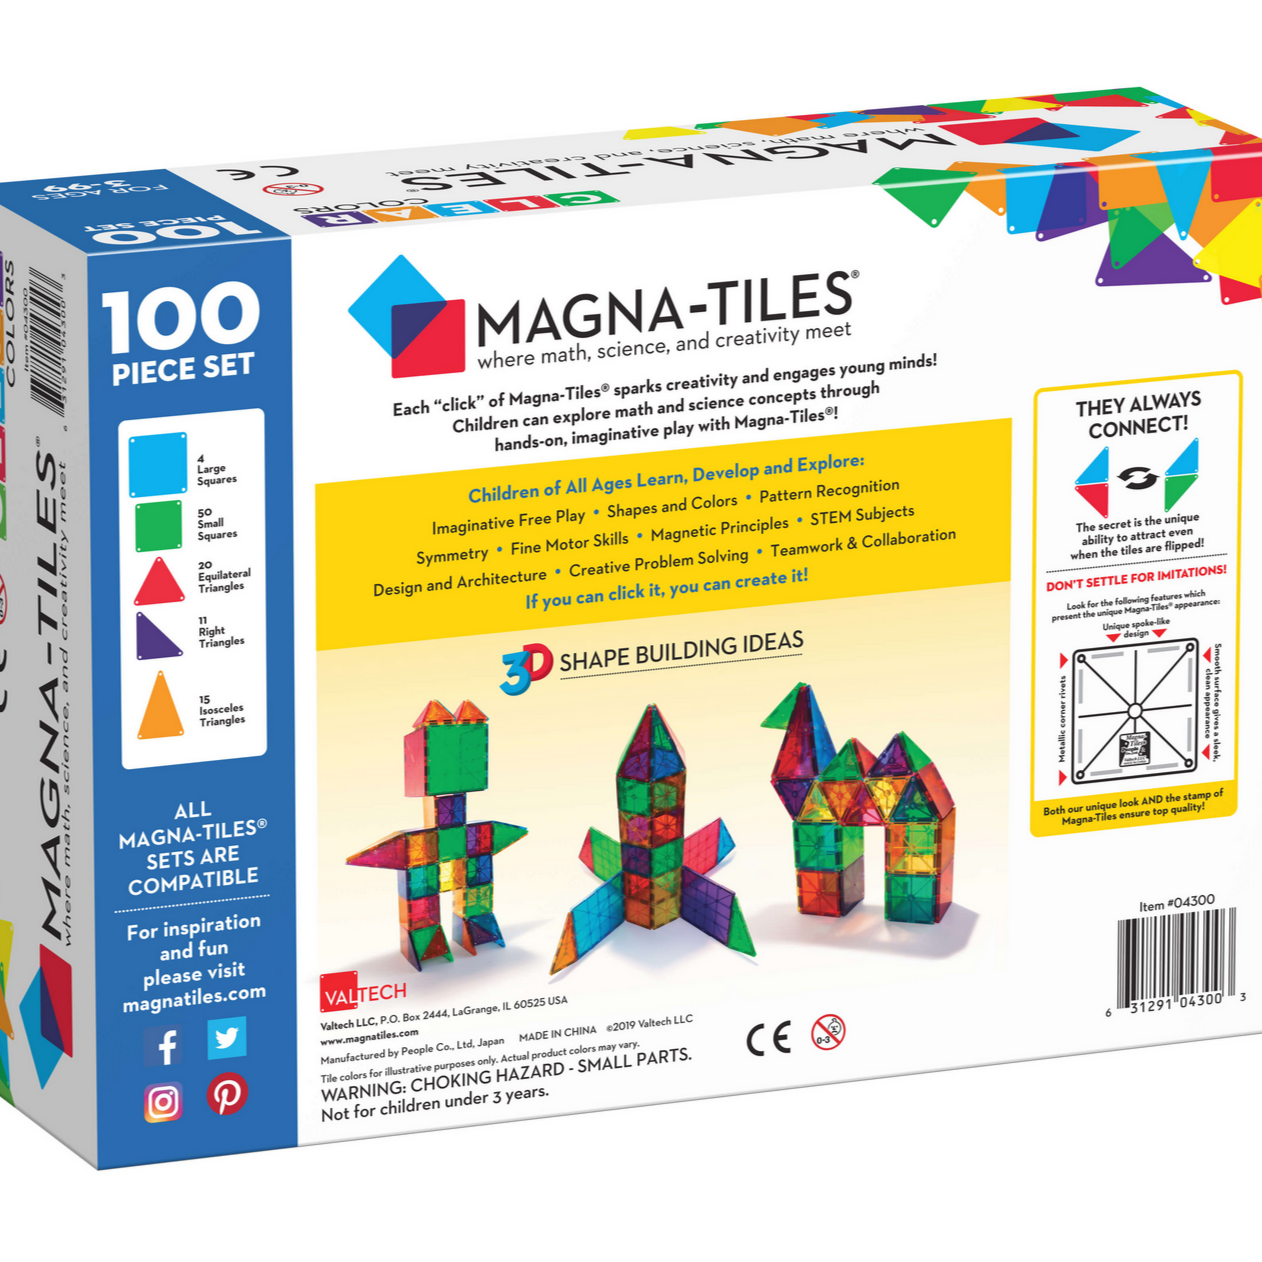 Magna-Tiles Clear Colors 100-Piece Set -3yrs+